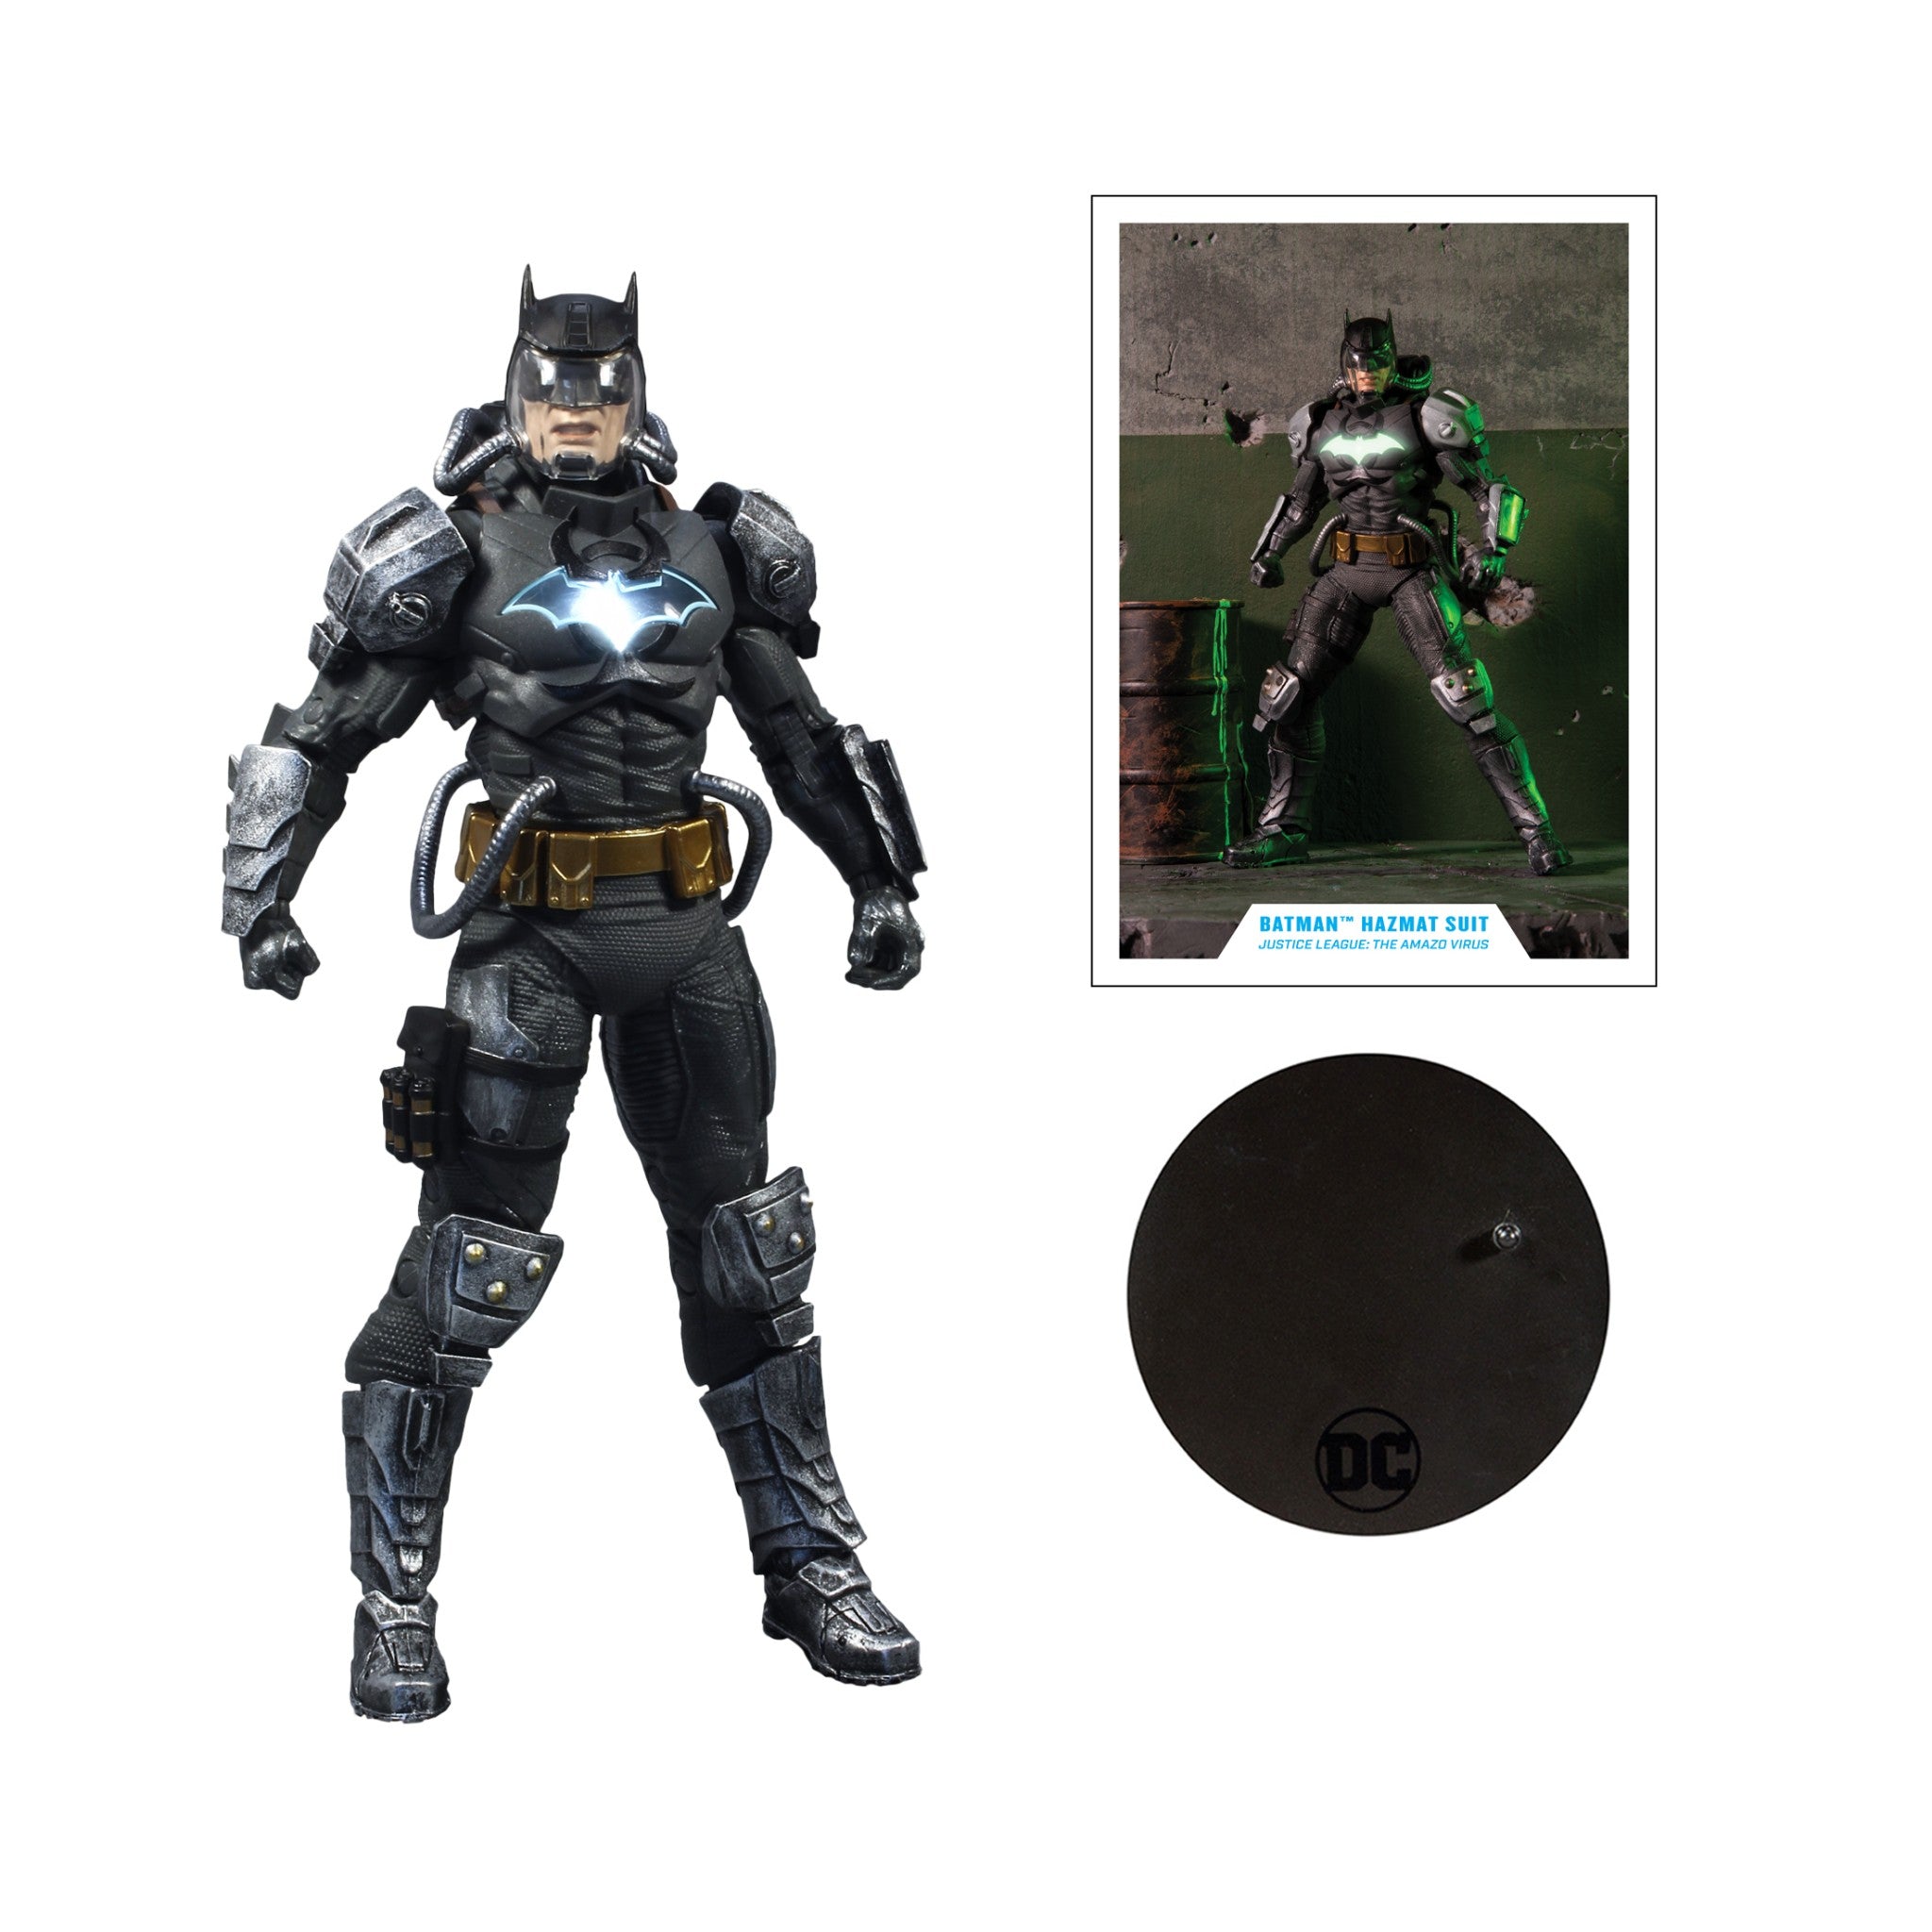 DC Multiverse Amazo Virus Batman Hazmat Suit Gold Label - McFarlane Toys